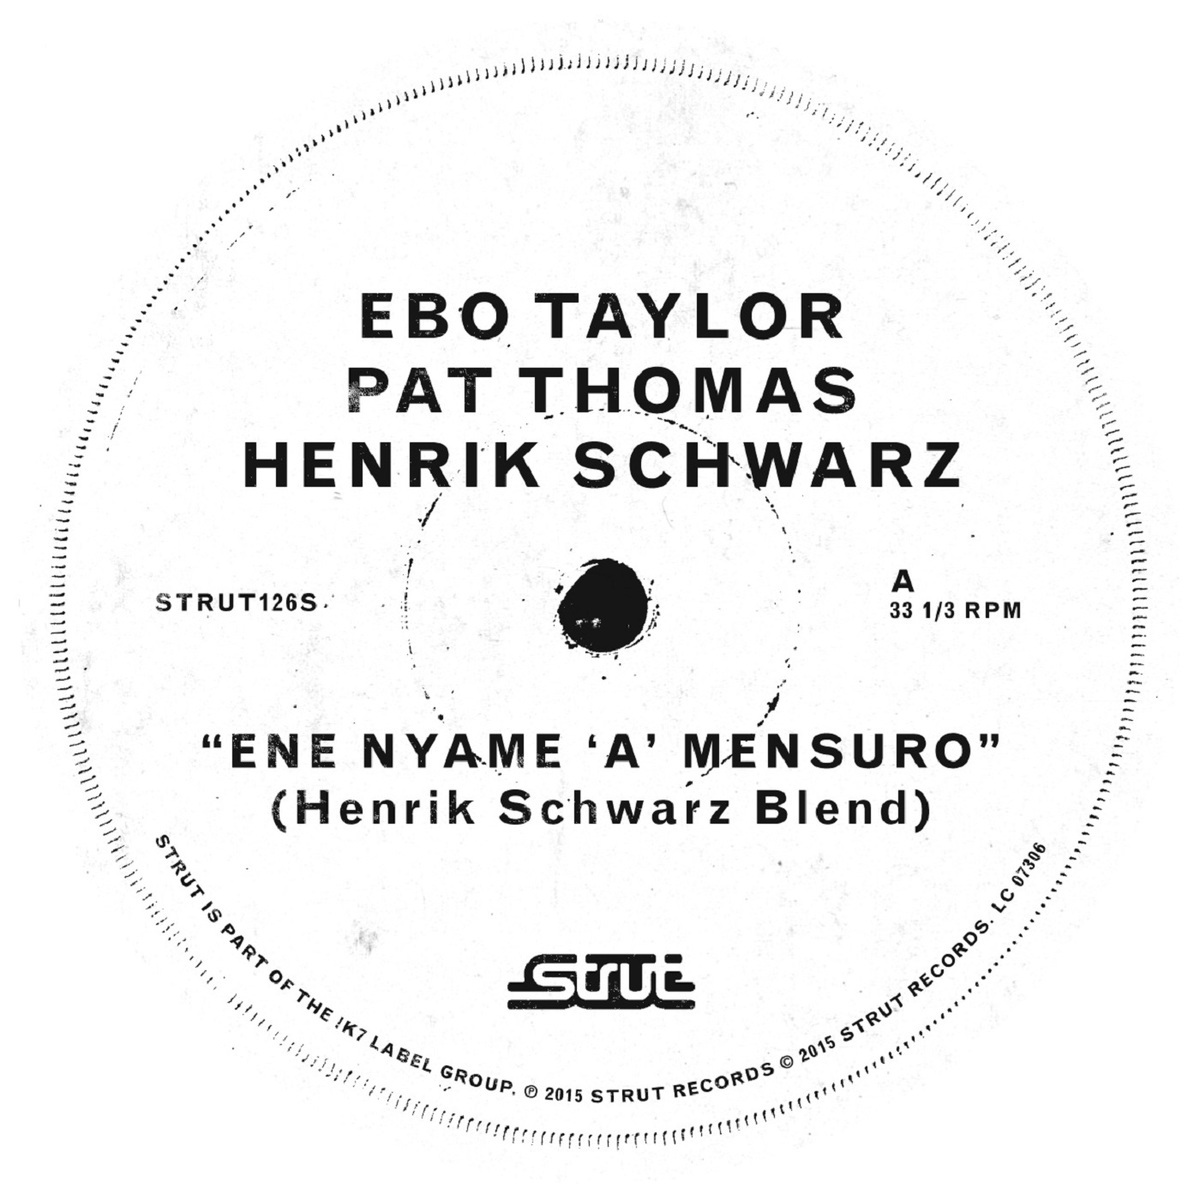 Ebo Taylor, Pat Thomas, Henrik Schwarz - Eye Nyam Nam 'A' Mensuro (Henrik Schwarz Mixes) / Strut